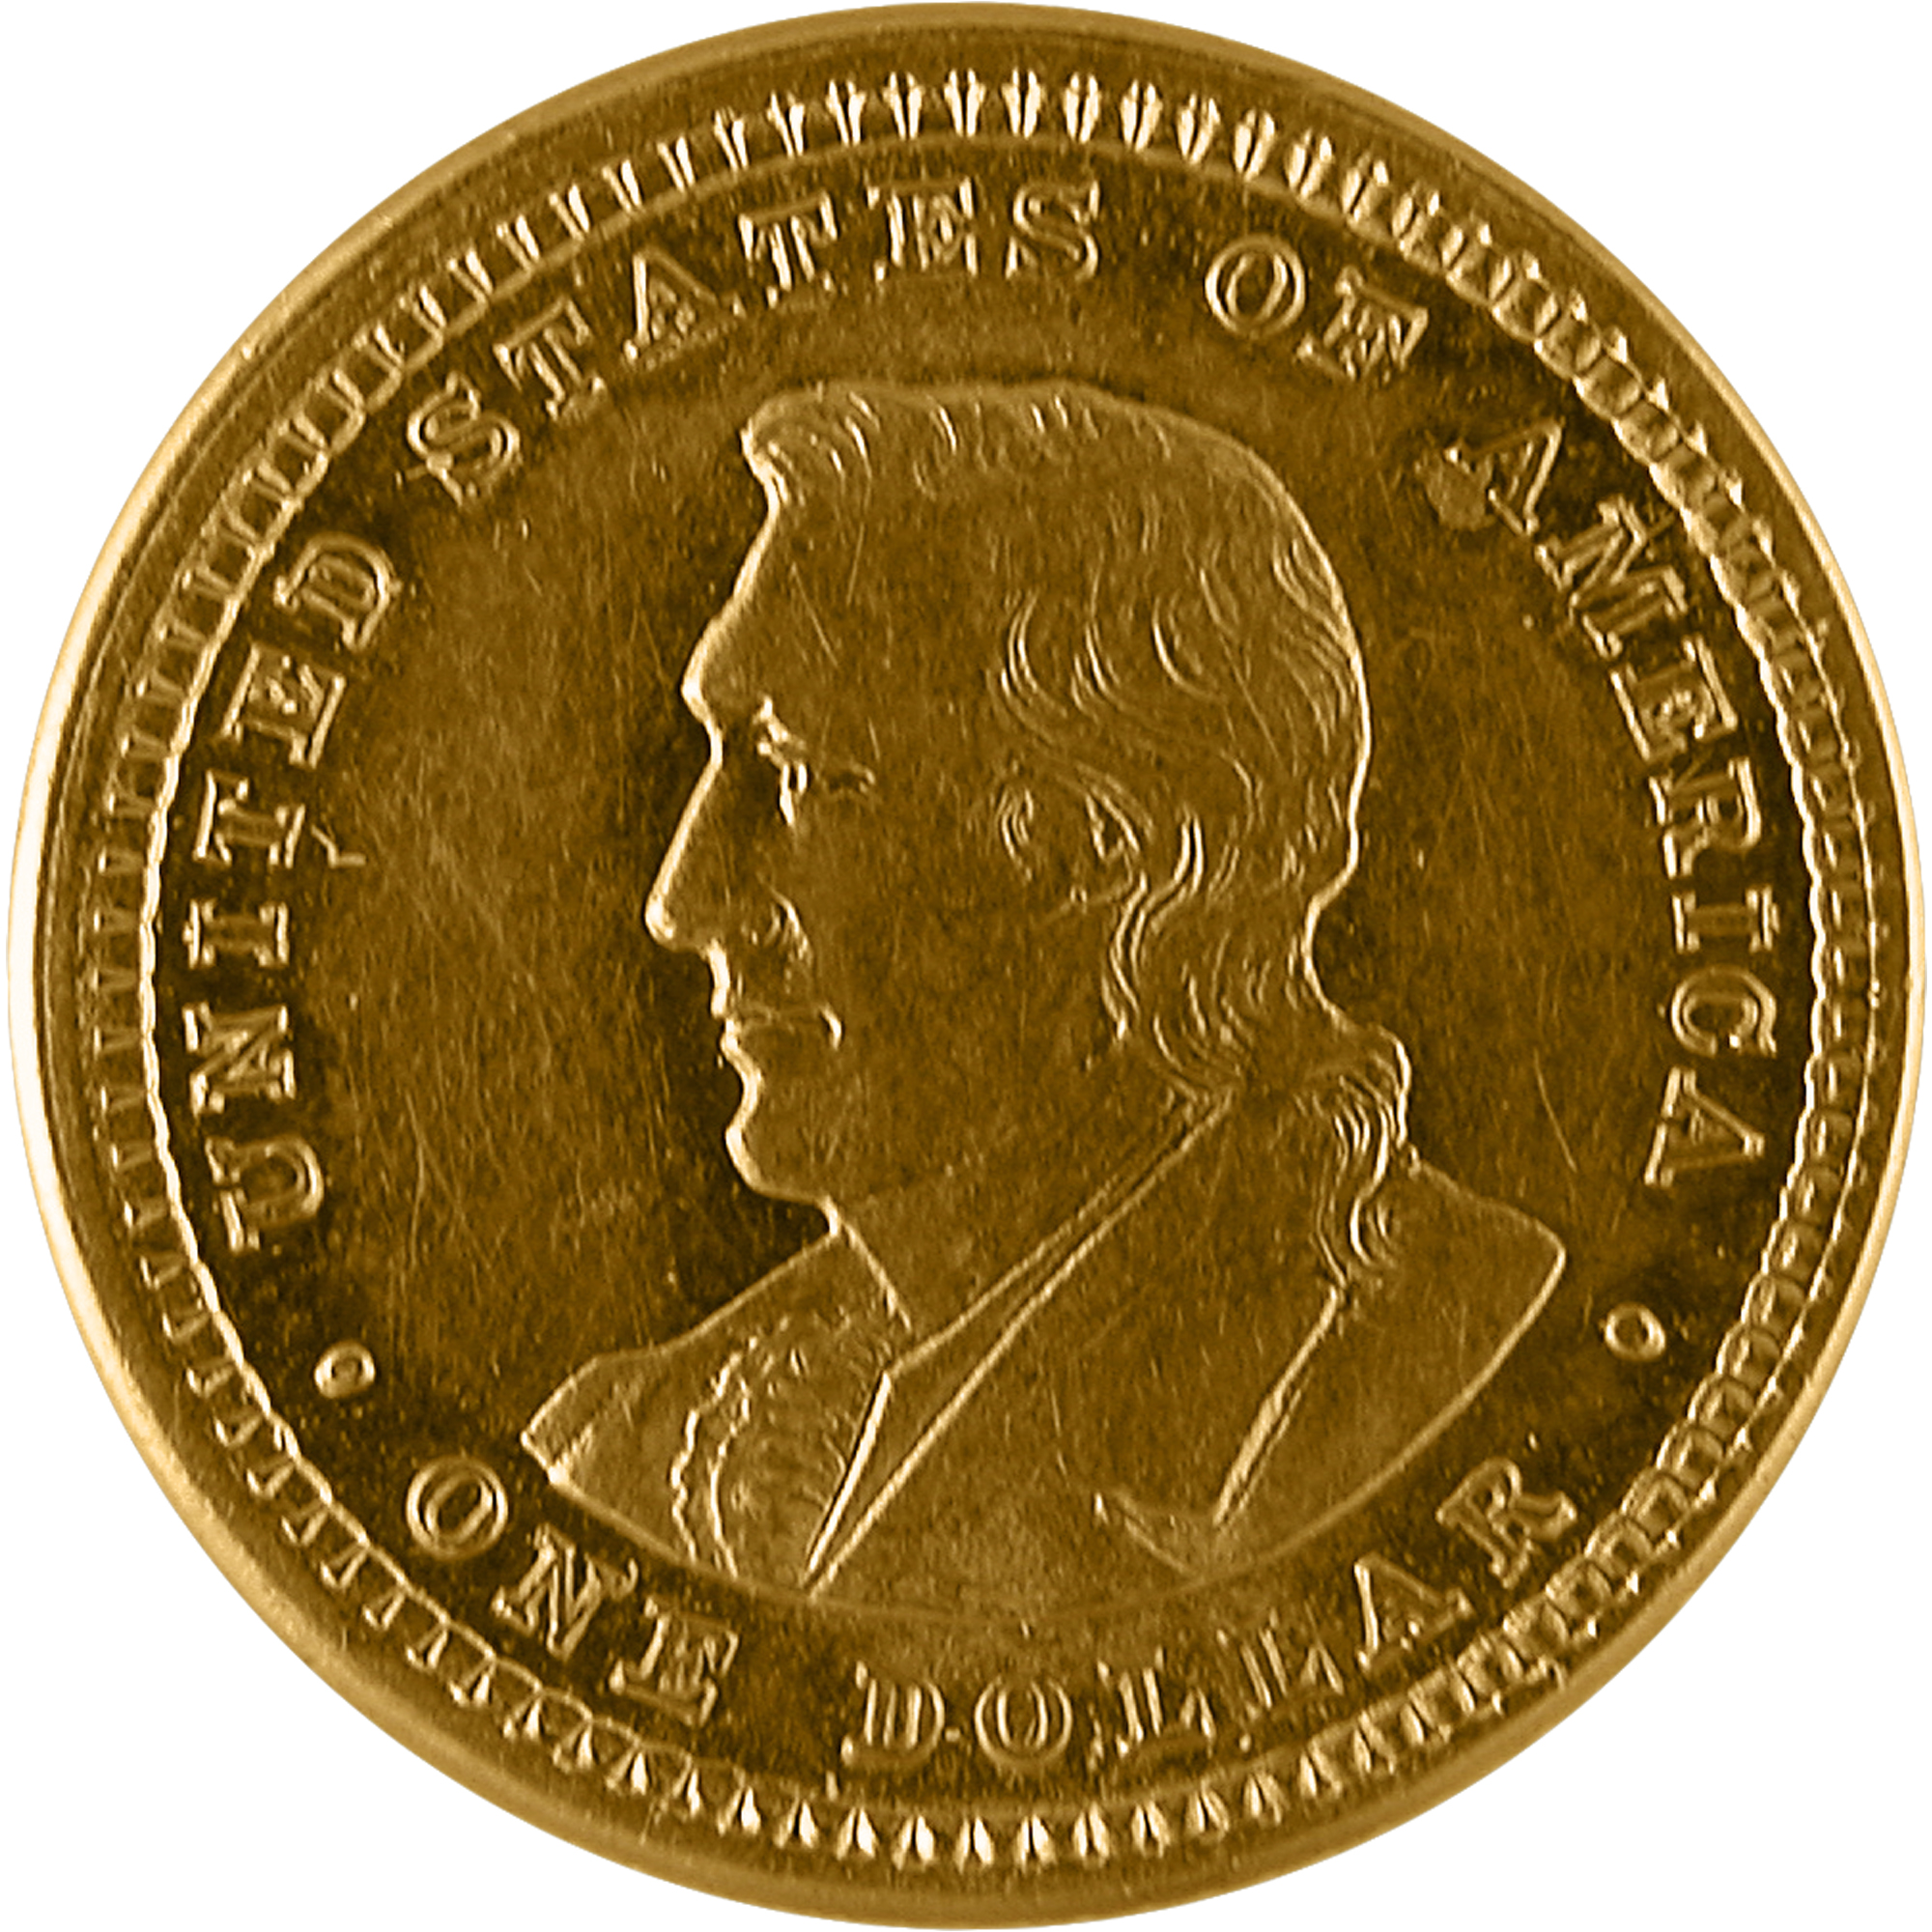 1904-05 Lewis Clark Centennial Exposition Commemorative Gold One Dollar Coin Reverse